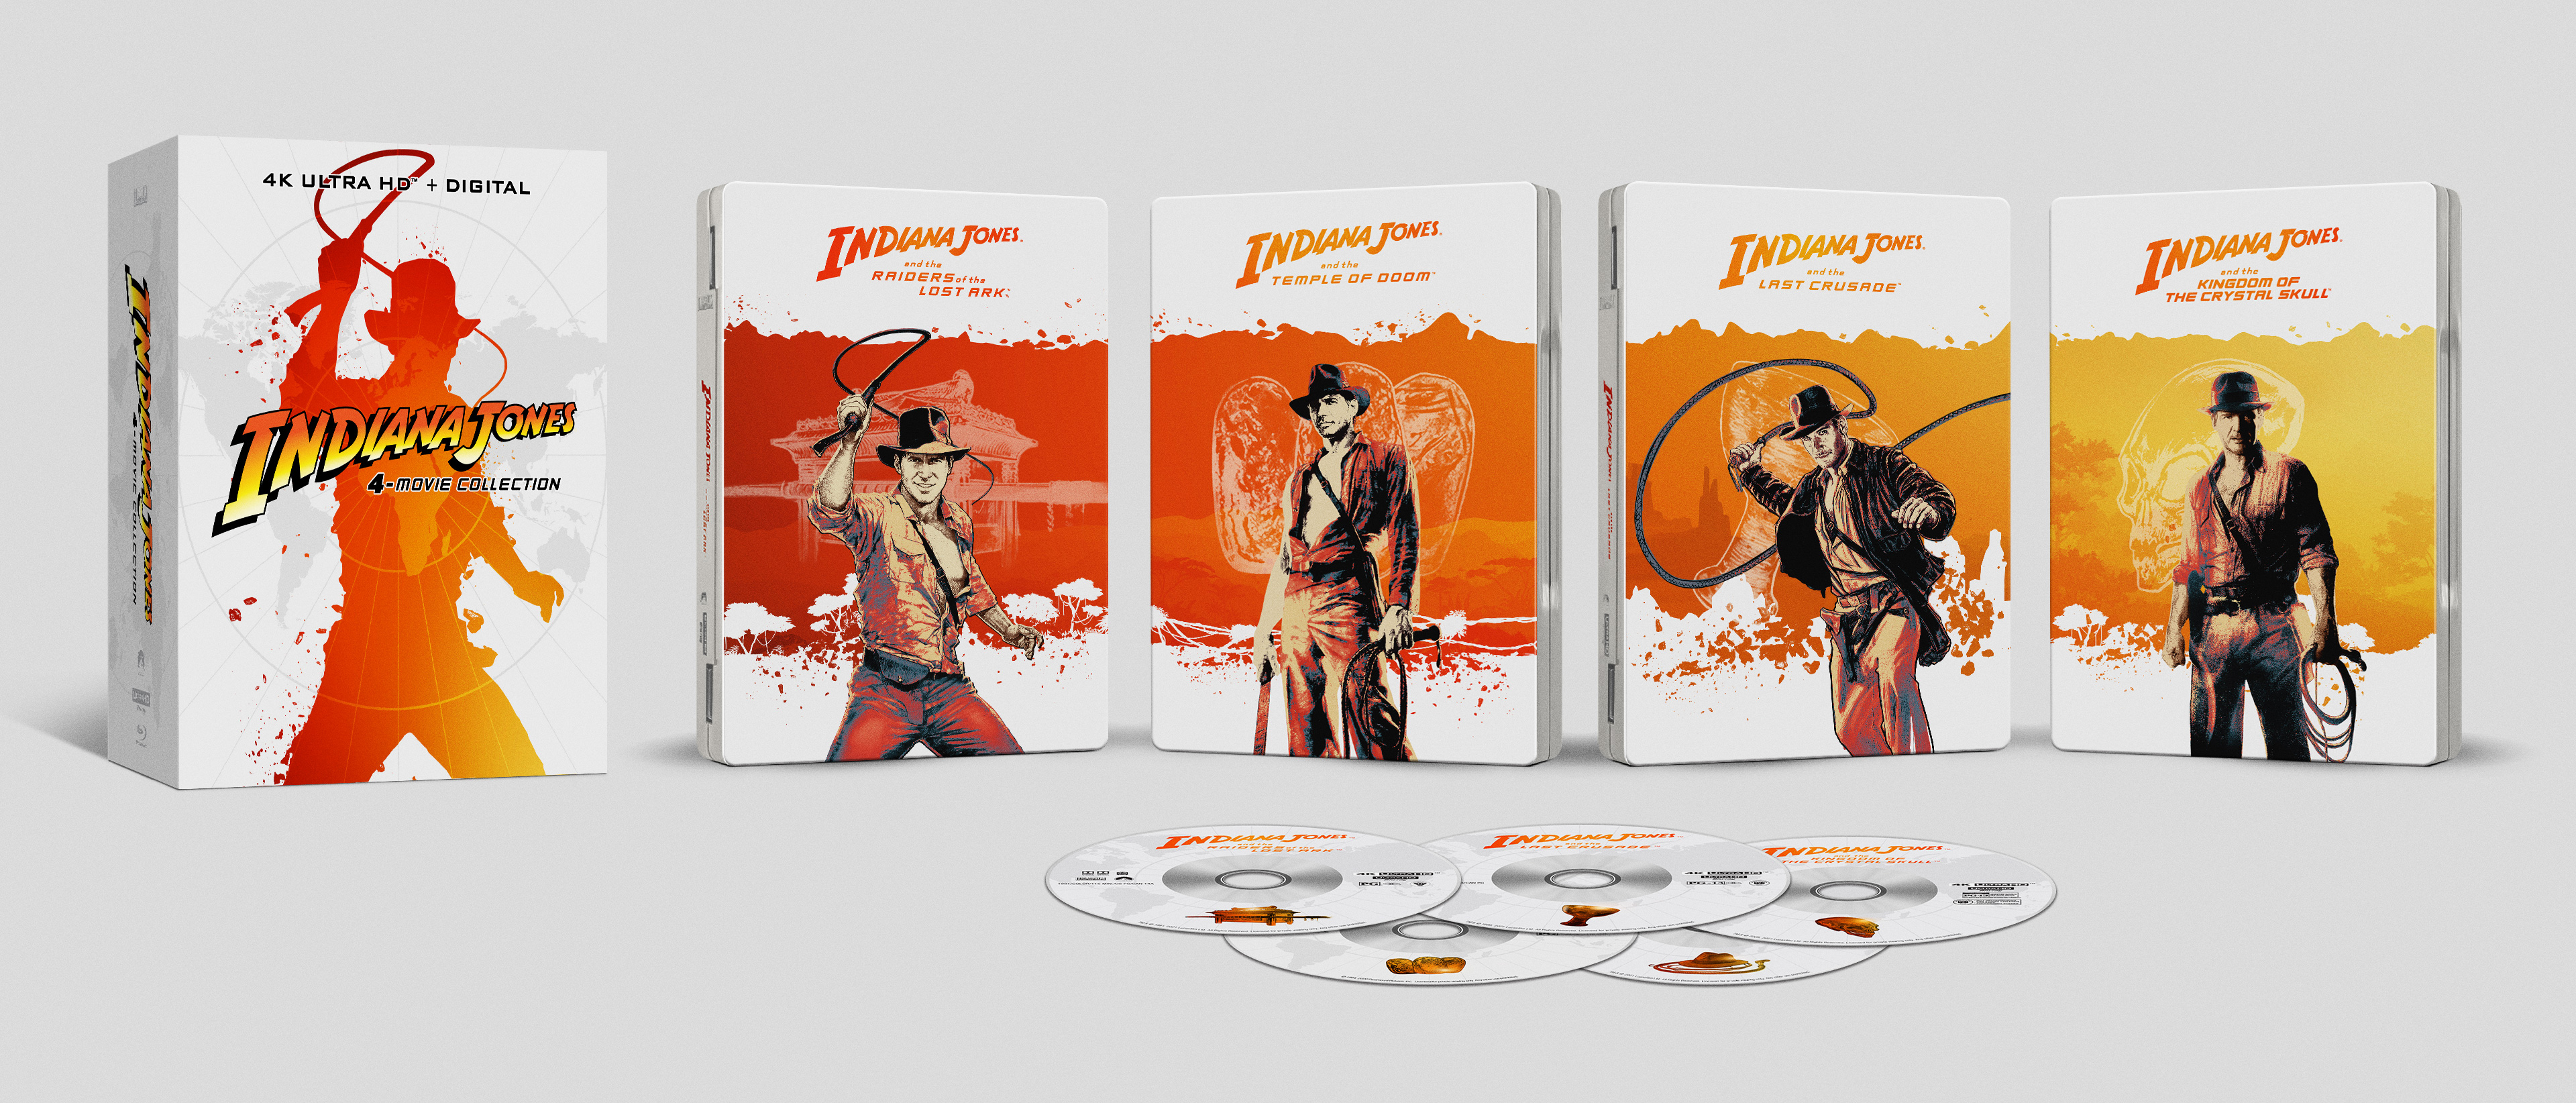 Indiana Jones 4 Movie Collection [SteelBook] [Includes Digital Copy] [4K Ultra HD Blu Ray]